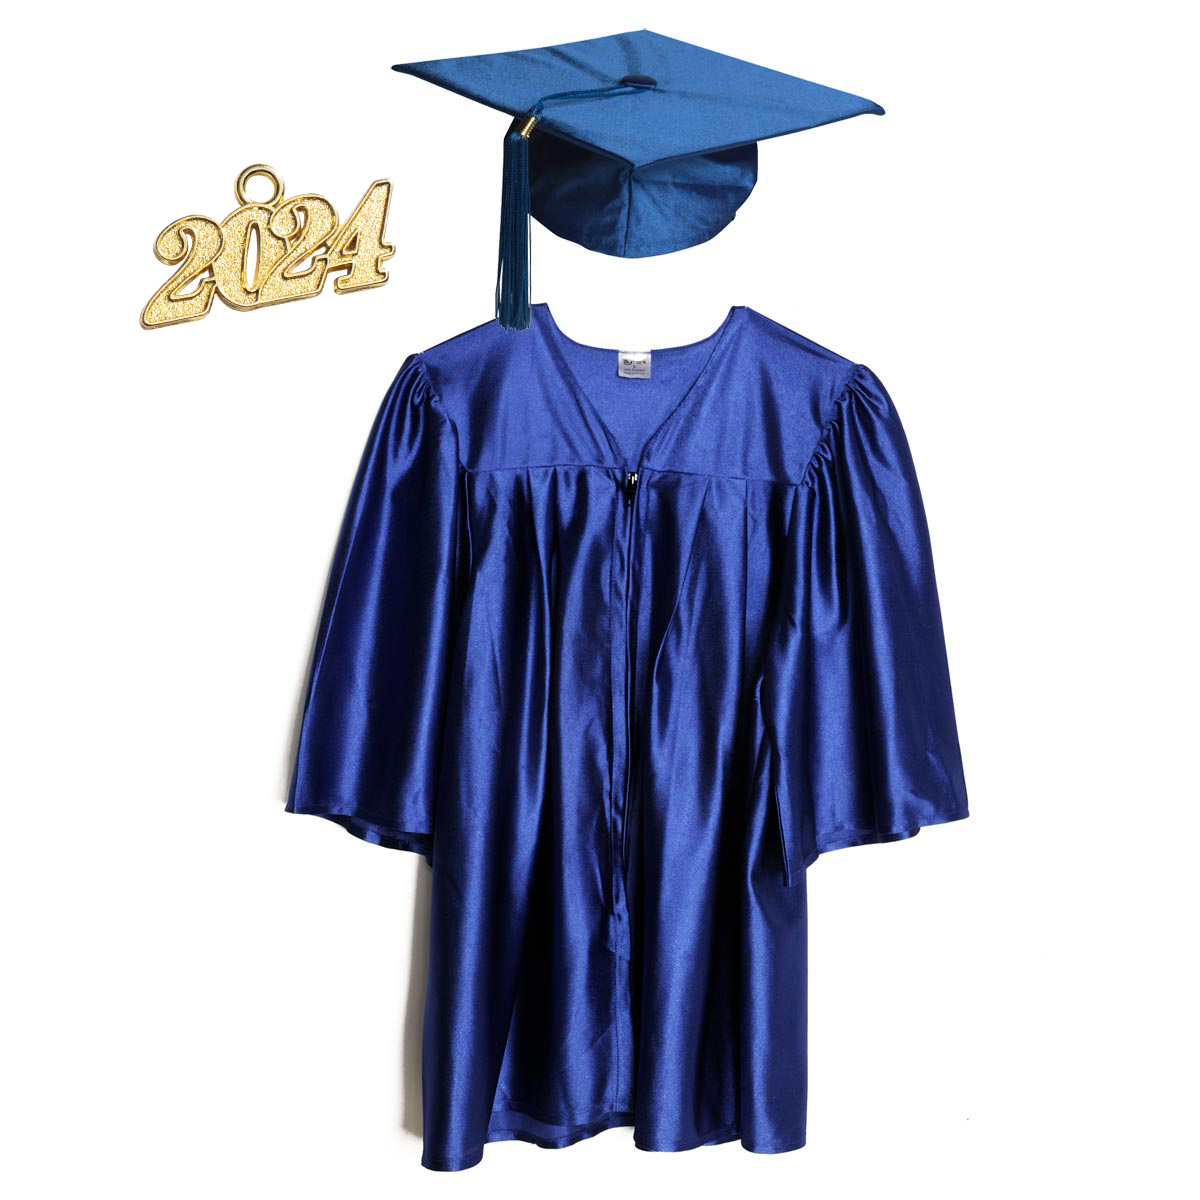 Newrara Unisex Shiny Kindergarten Graduation Gown Cap with Tassel 